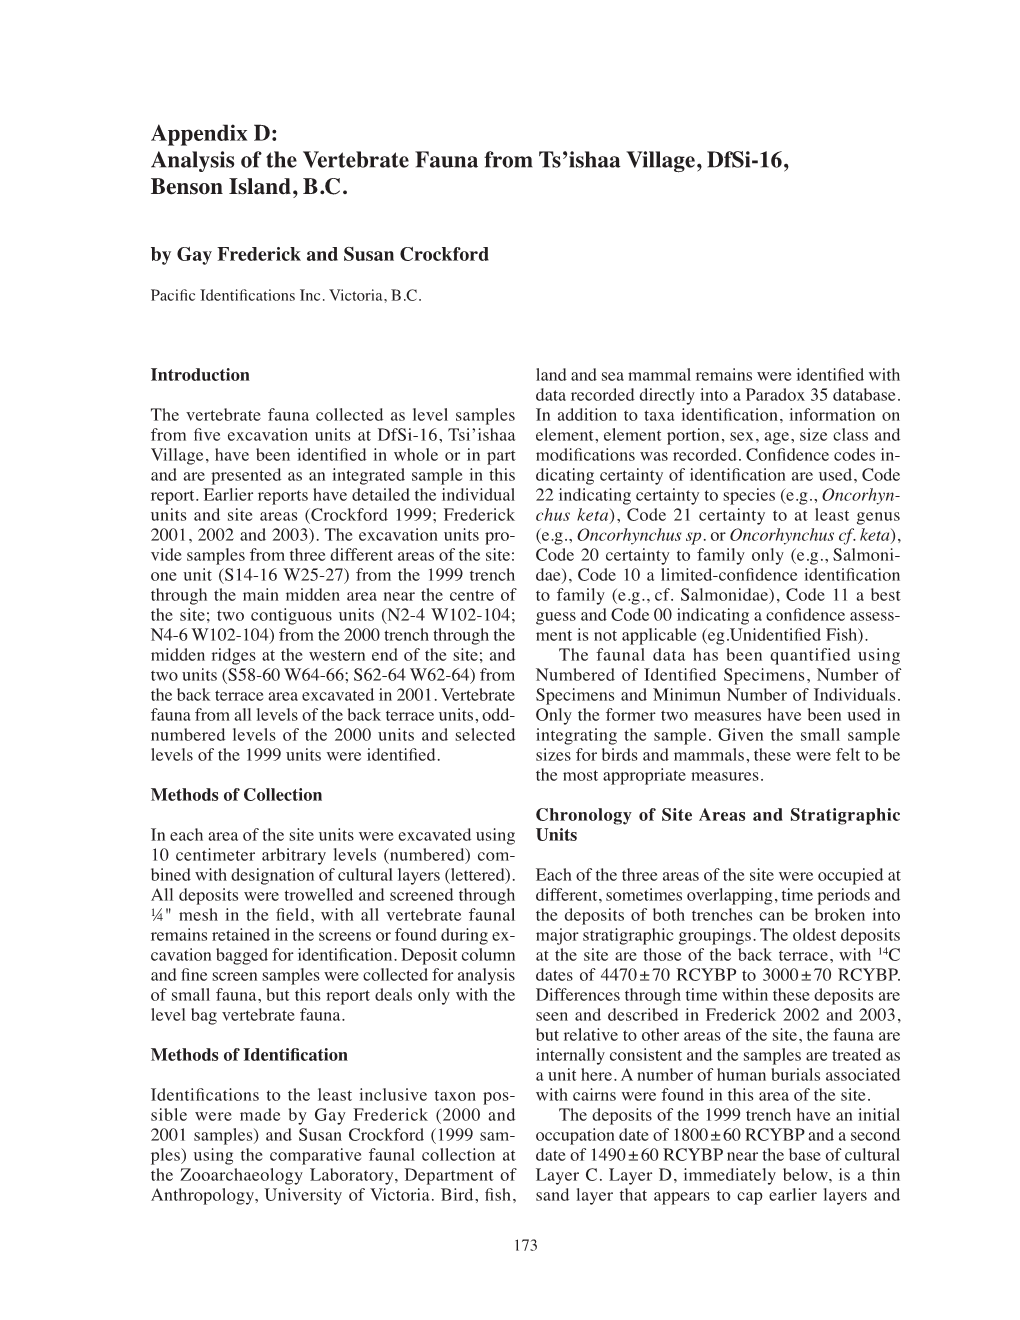 Analysis of the Vertebrate Fauna from Tsʼishaa Village, Dfsi-16, Benson Island, B.C